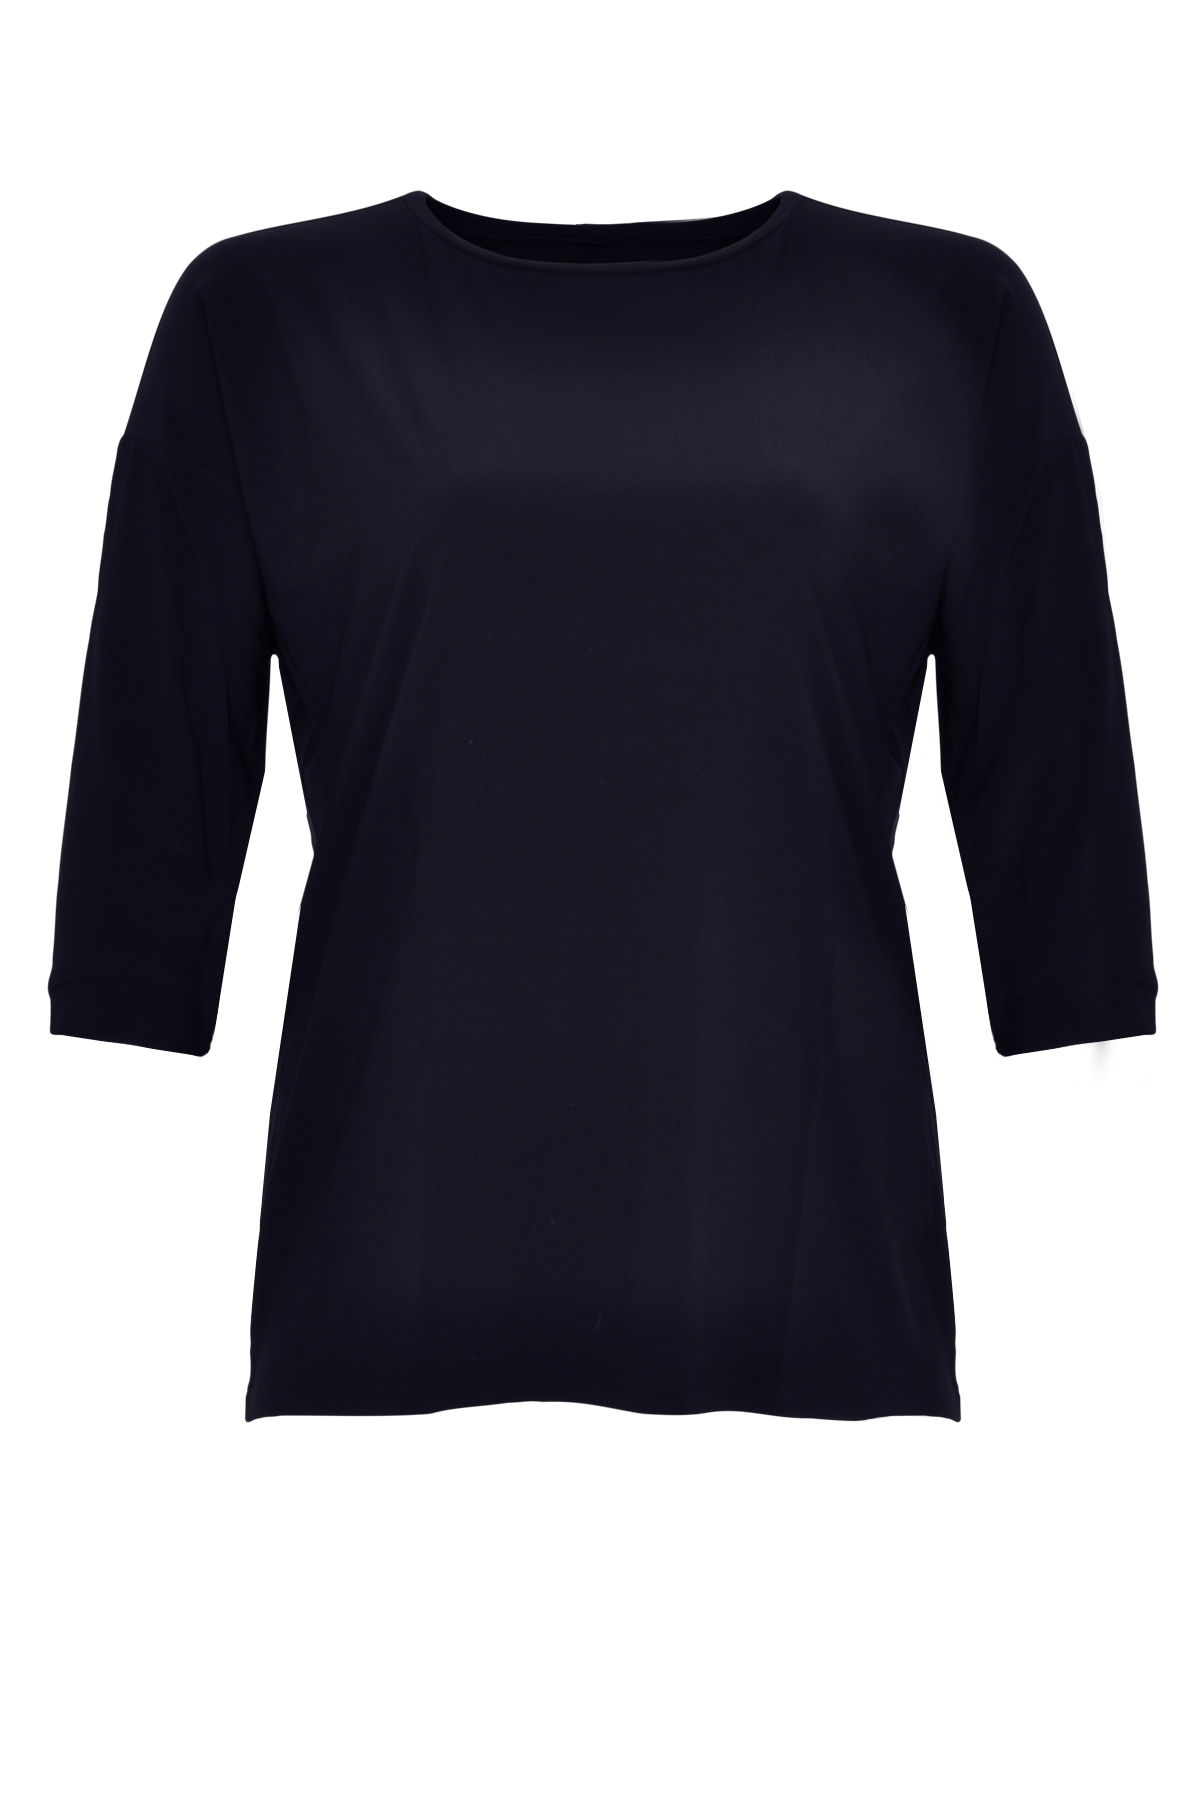 Shirt wide 3/4 sleeve DOLCE - black blue